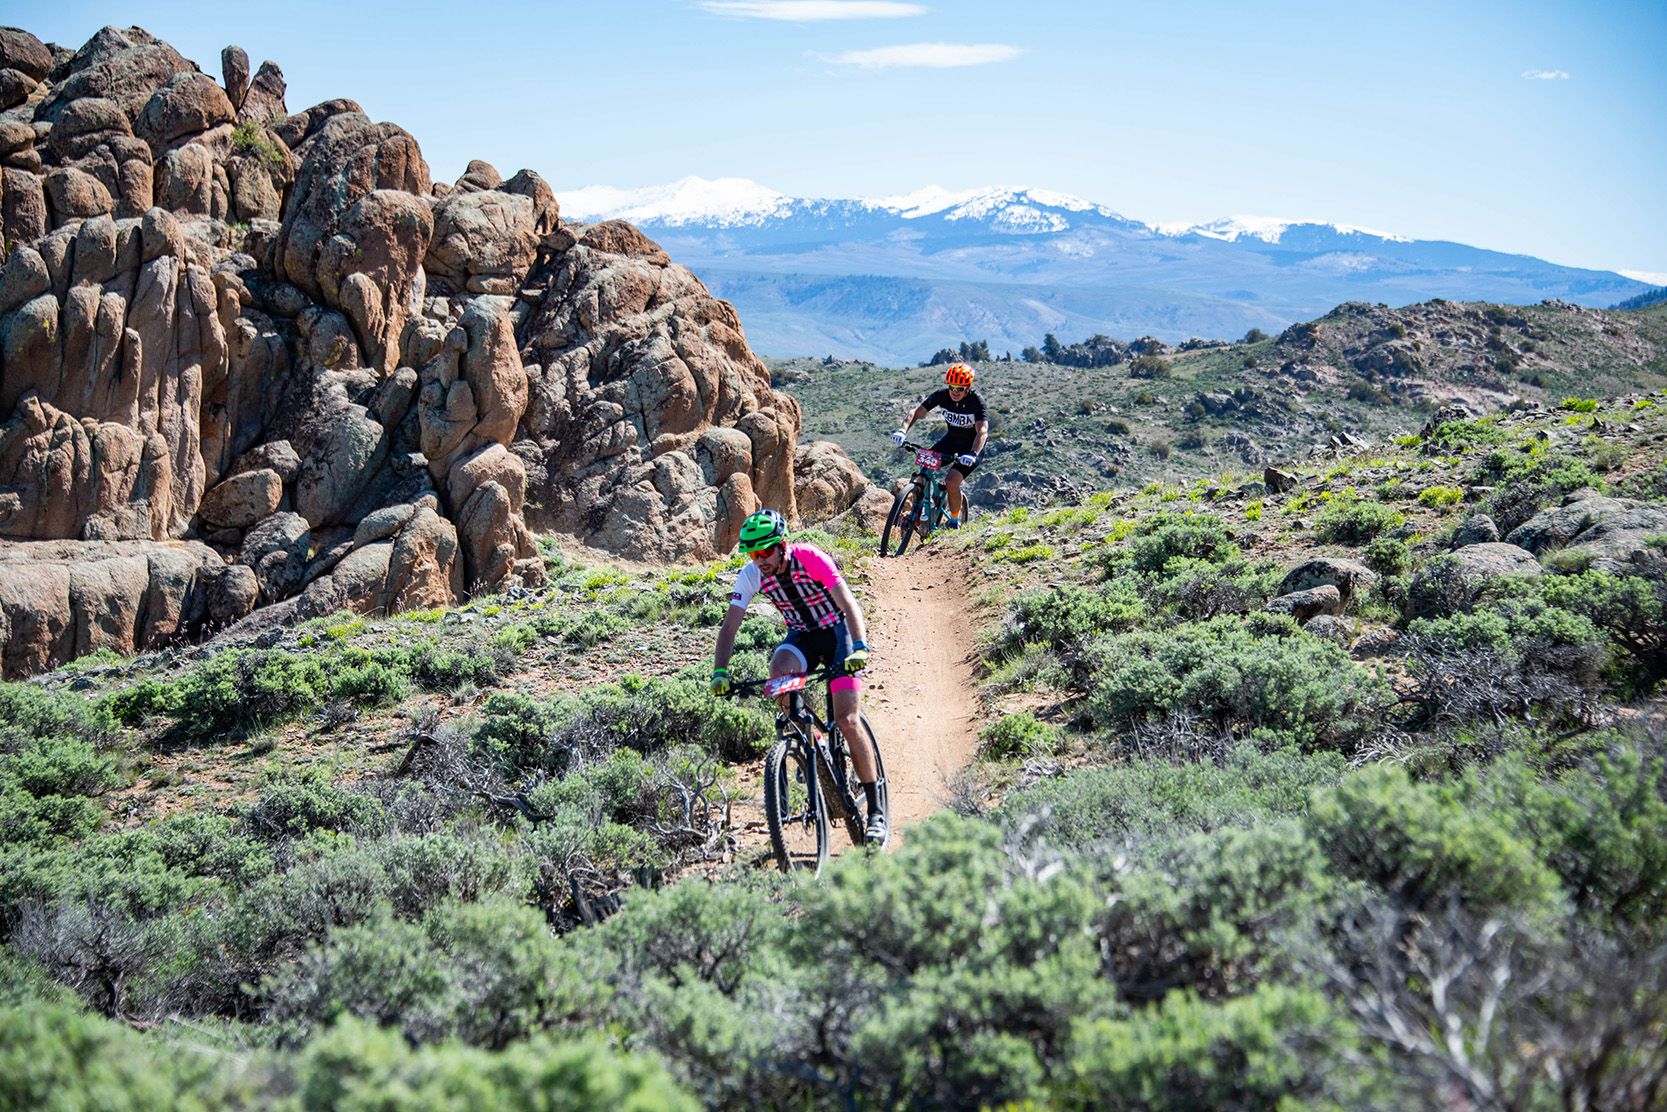 Two people ride mountain bikes at Hartman Rocks in spring.